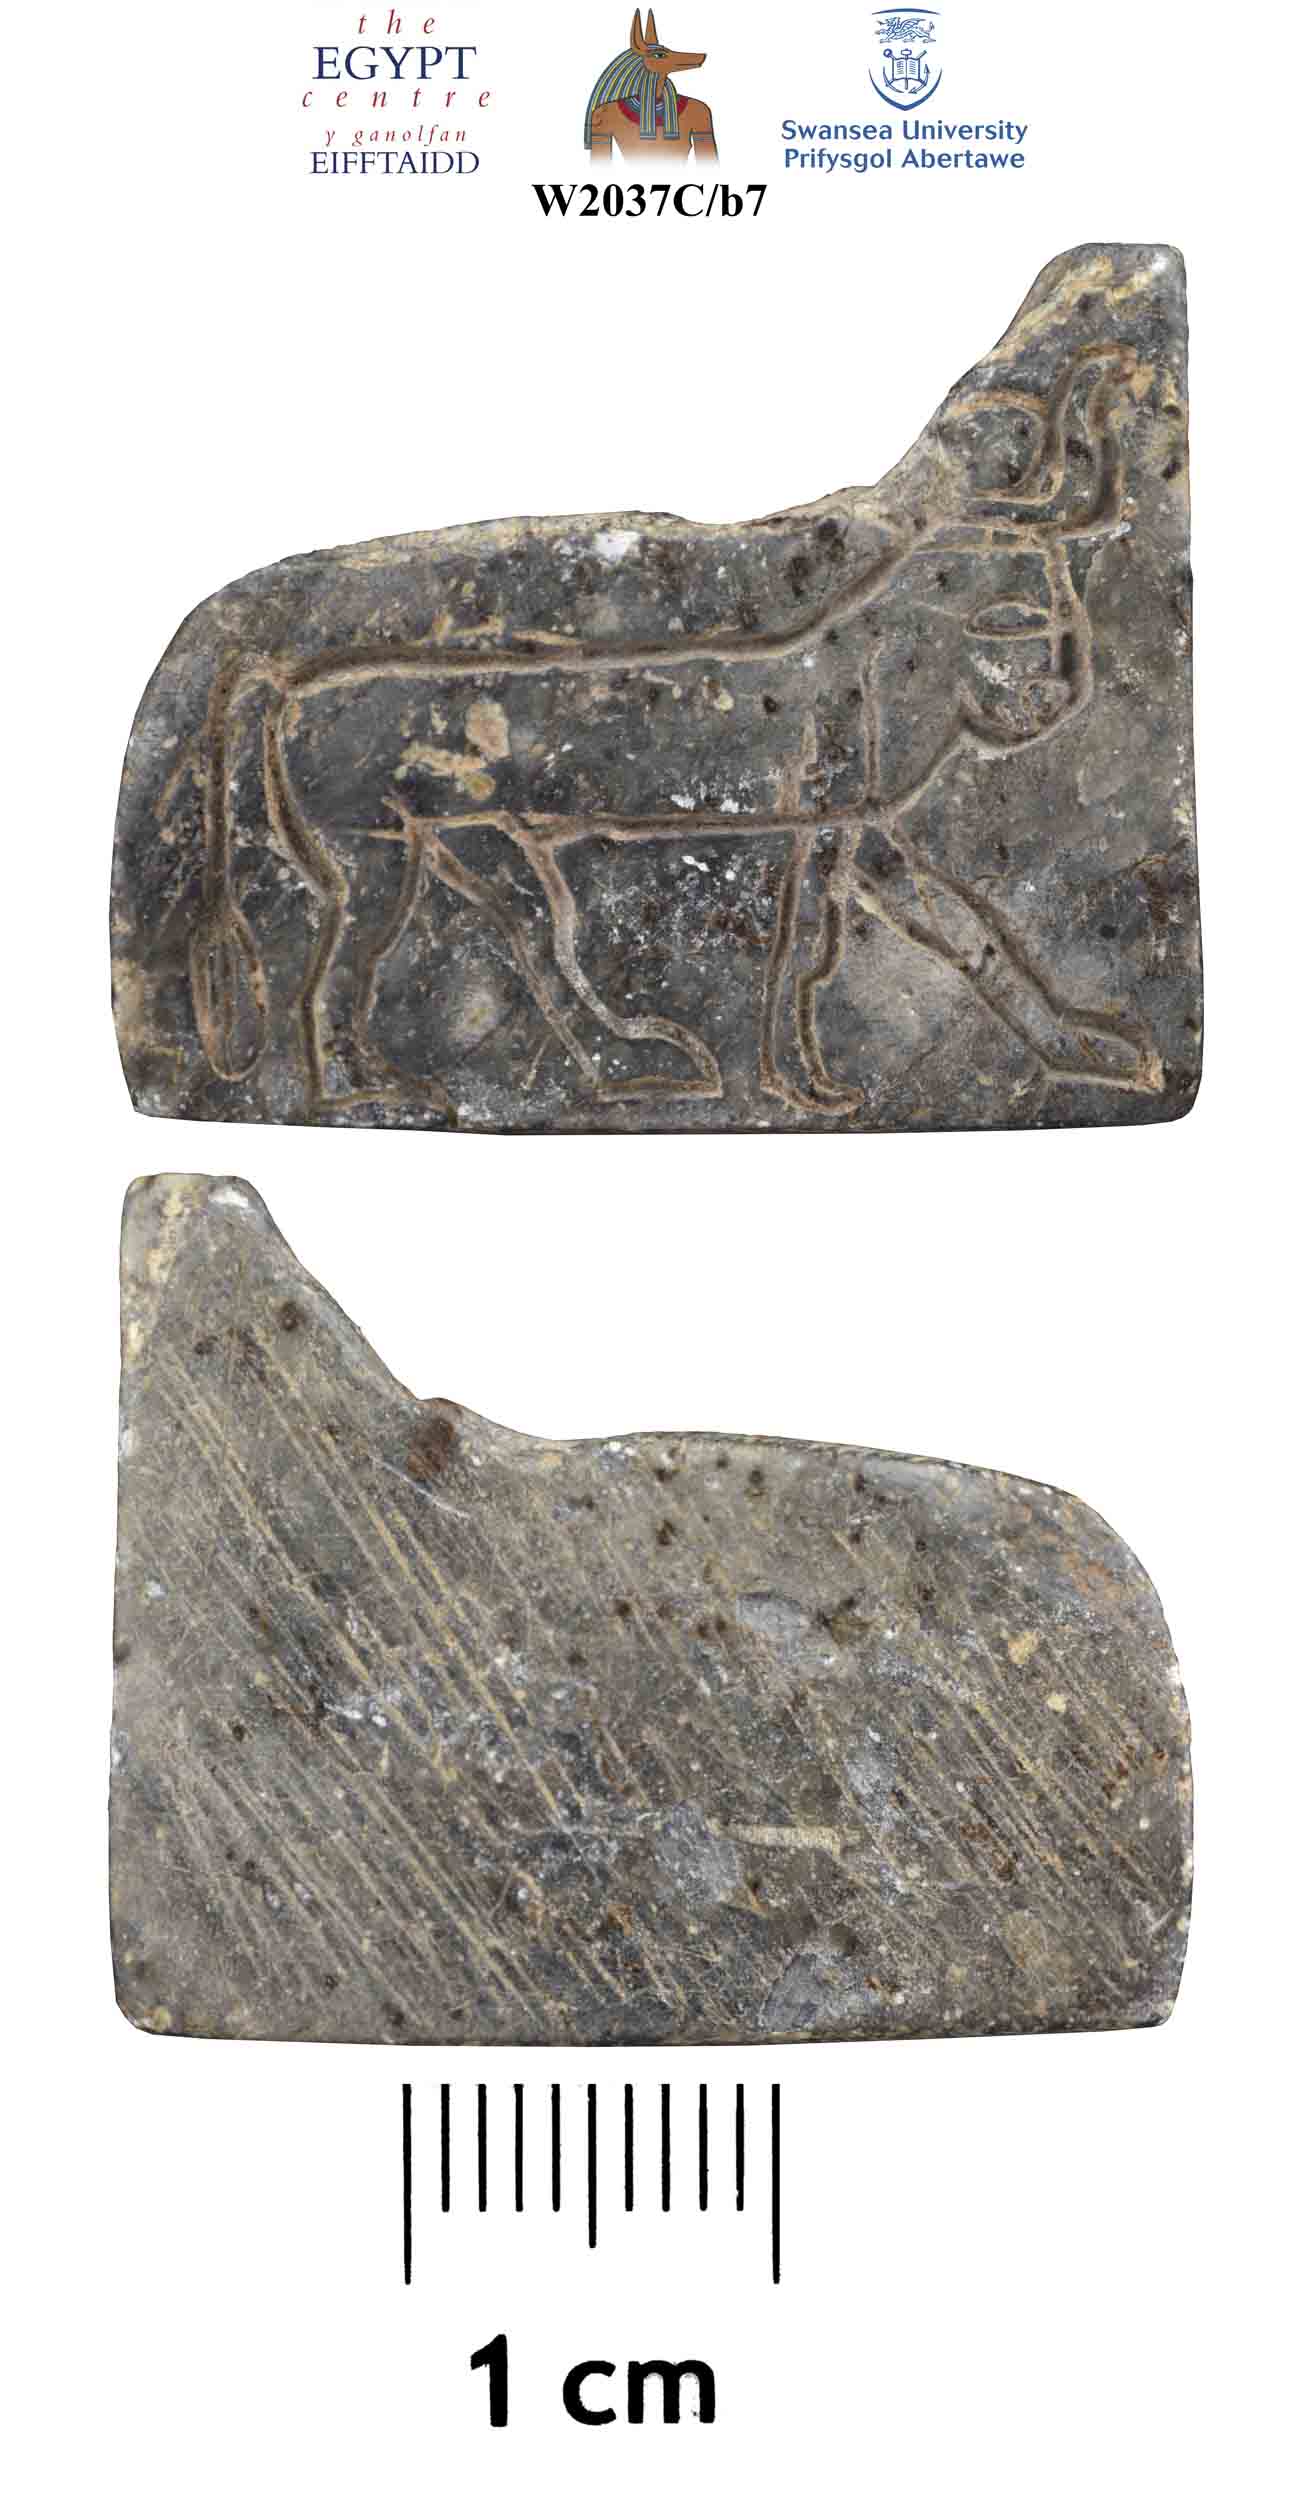 Image for: Faience amulet of Hathor